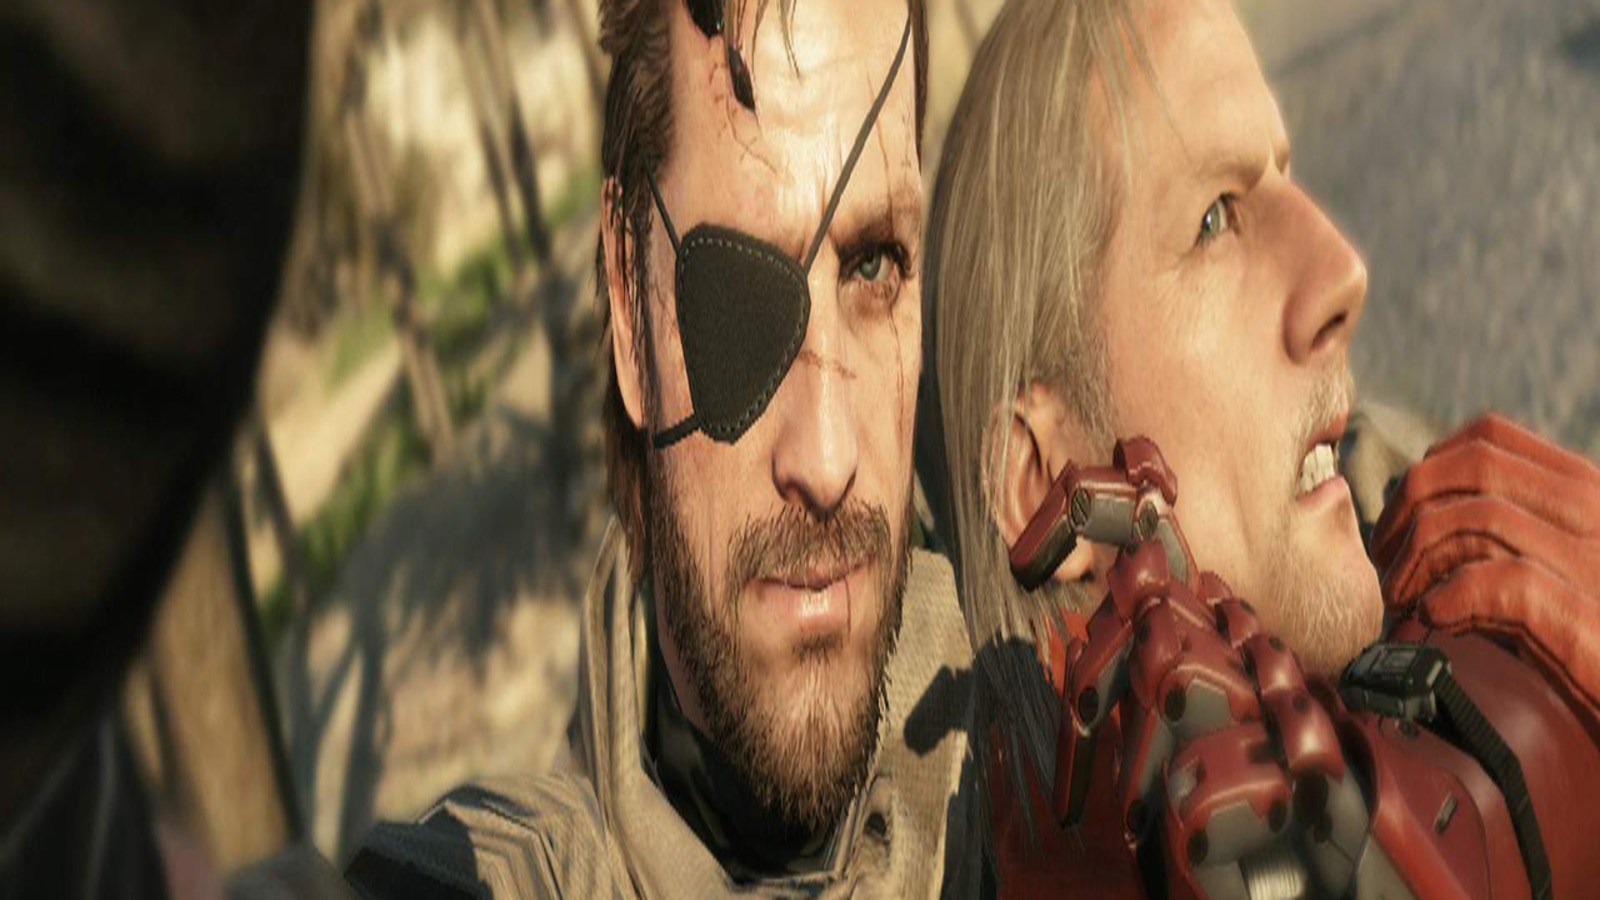 All of 'Metal Gear' Creator Hideo Kojima's Games, Ranked